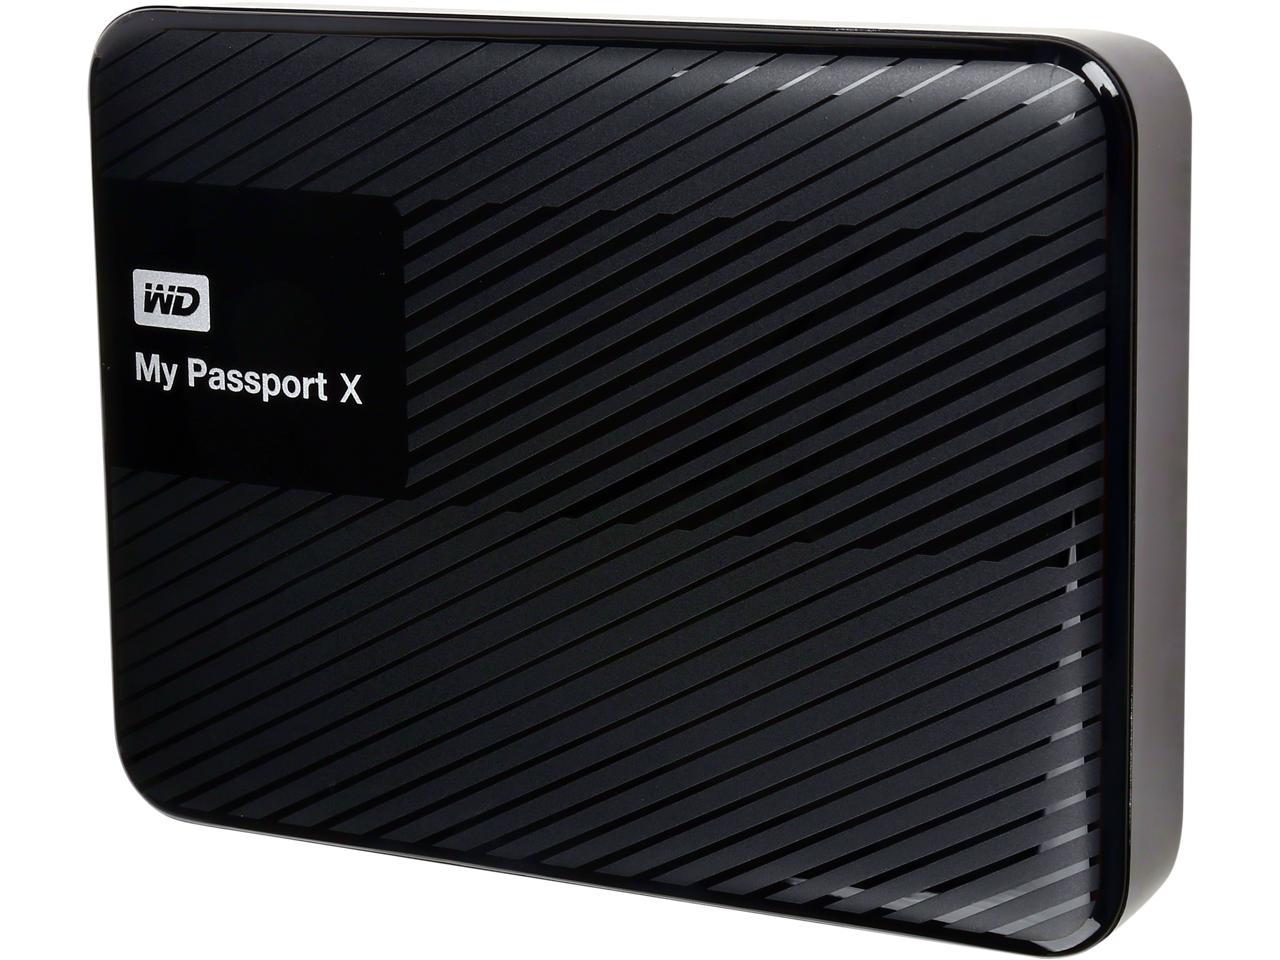 WDBCRM0030BBK-NESN USB 3.0 WD 3TB My Passport X for Xbox One Portable External Hard Drive 